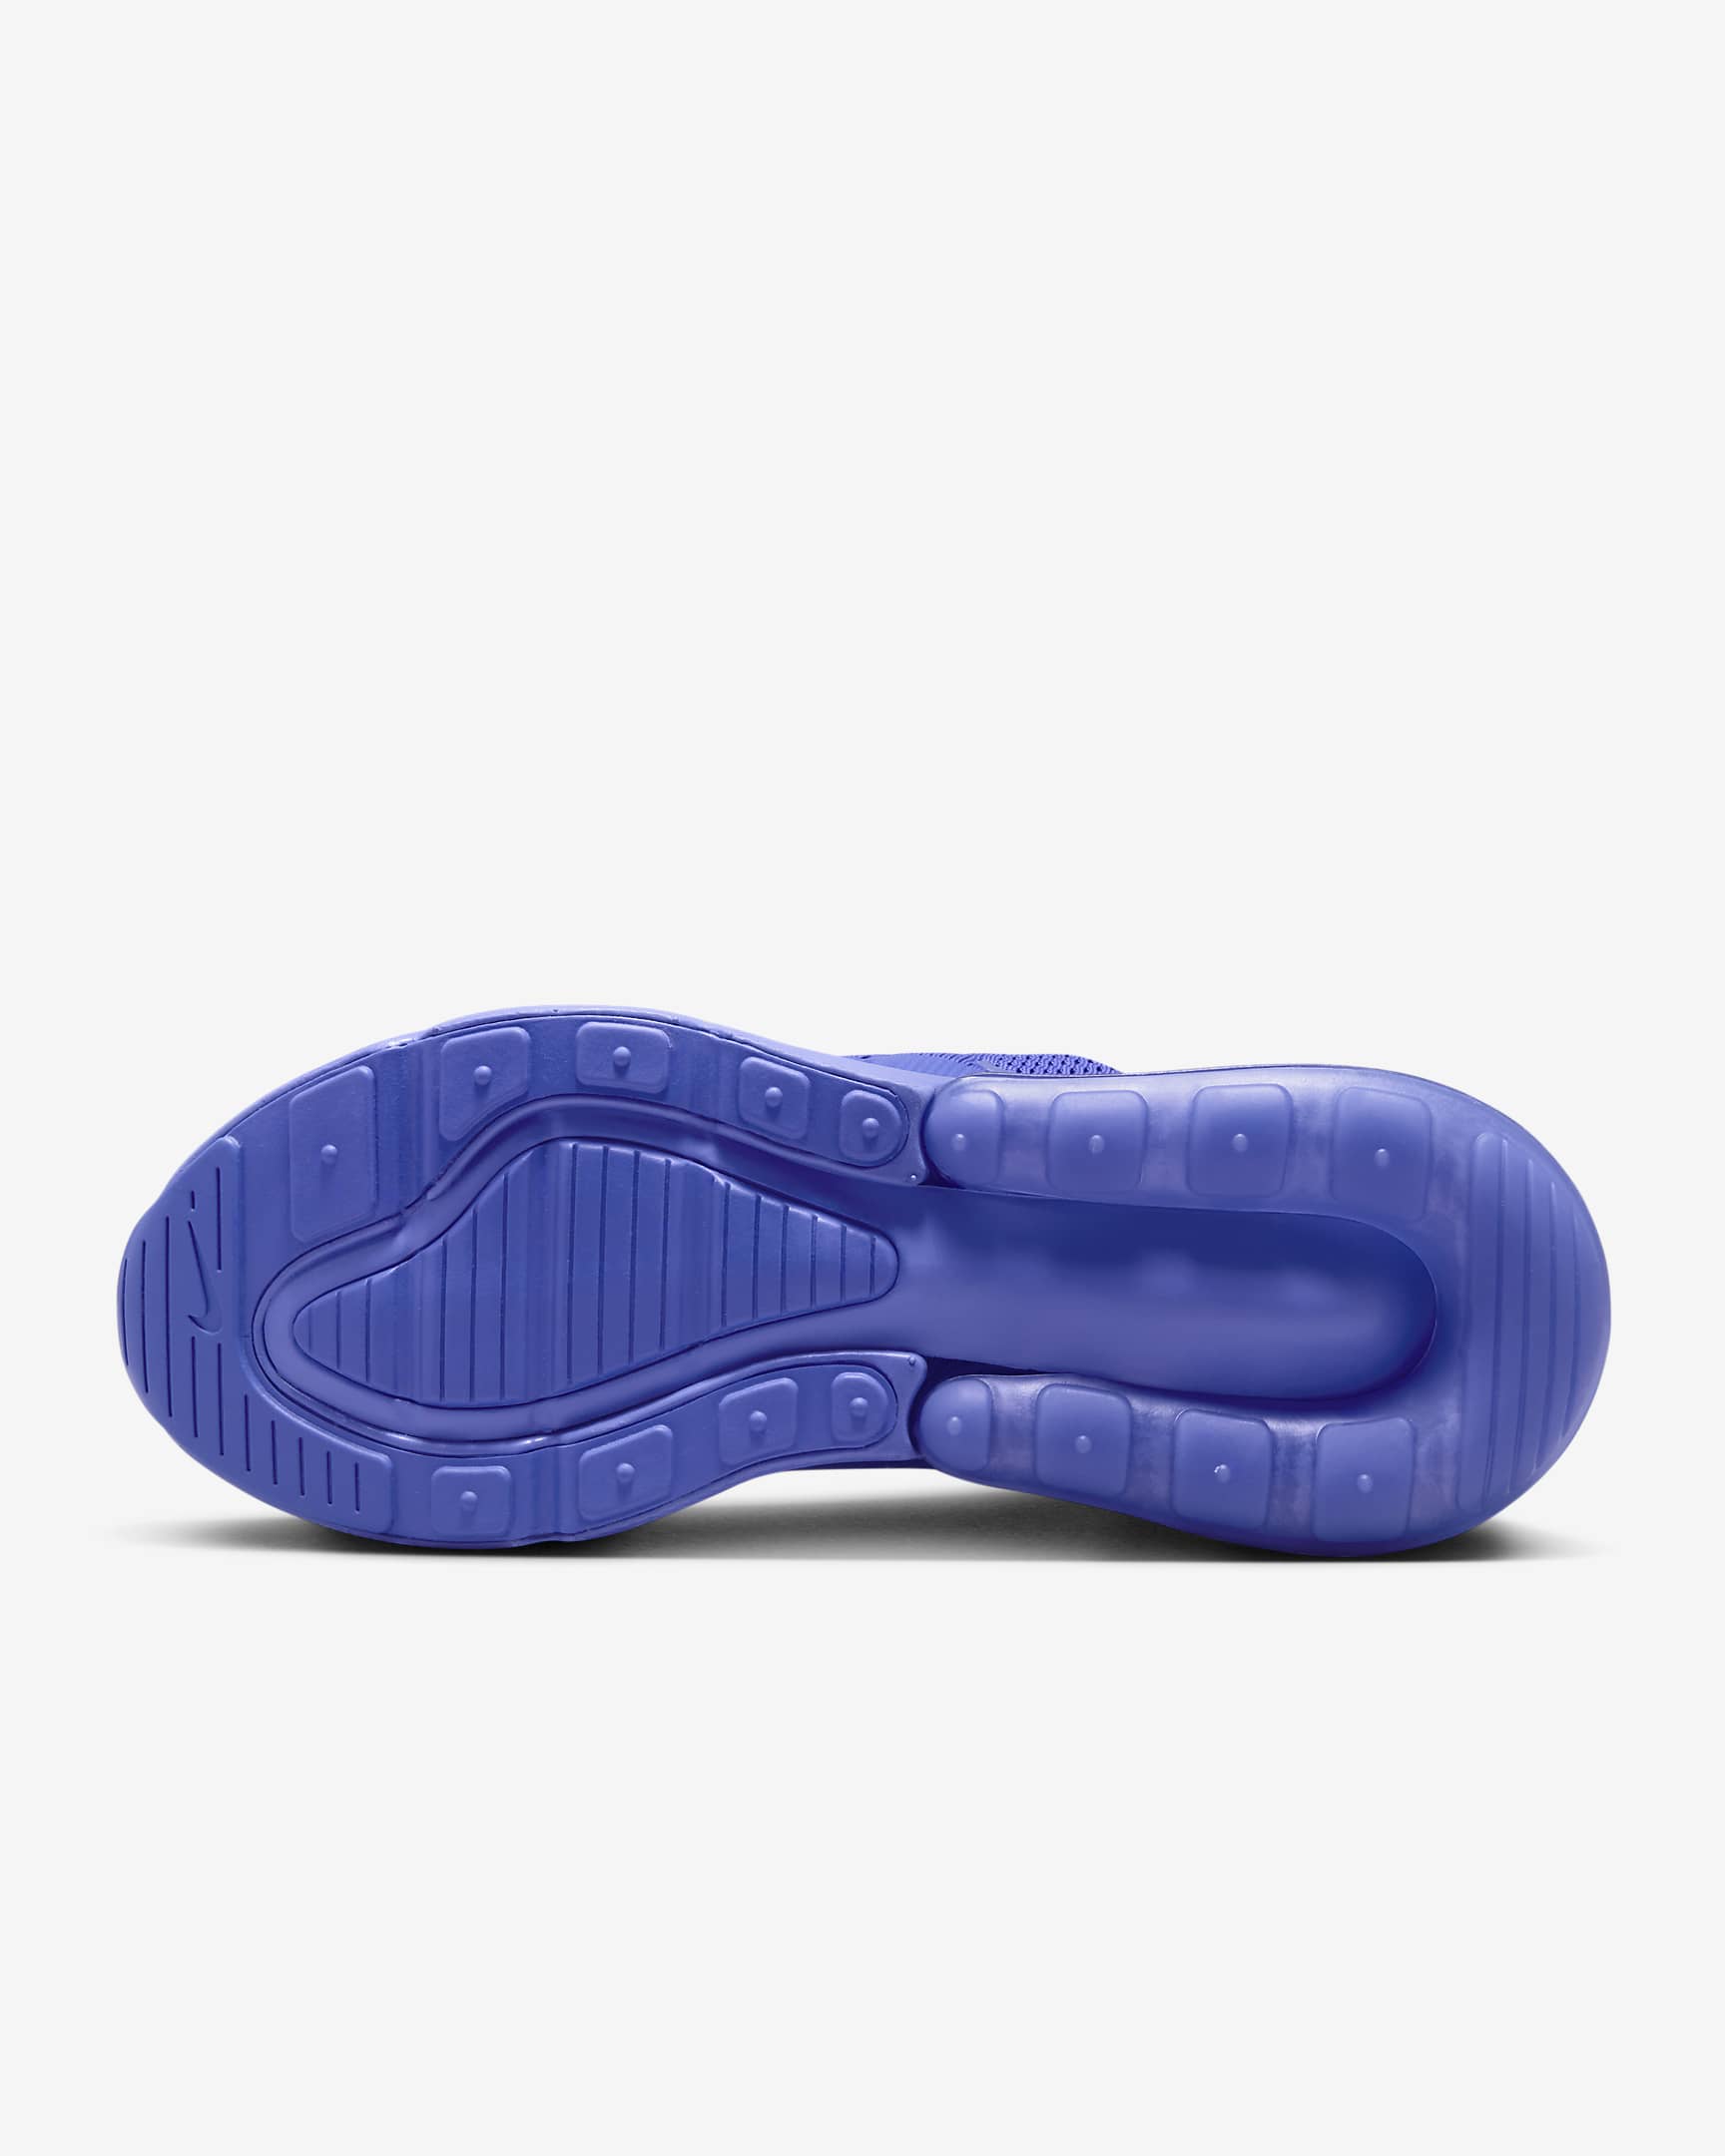 Nike Air Max 270 Women's Shoes - Light Ultramarine/White/Black/Light Ultramarine